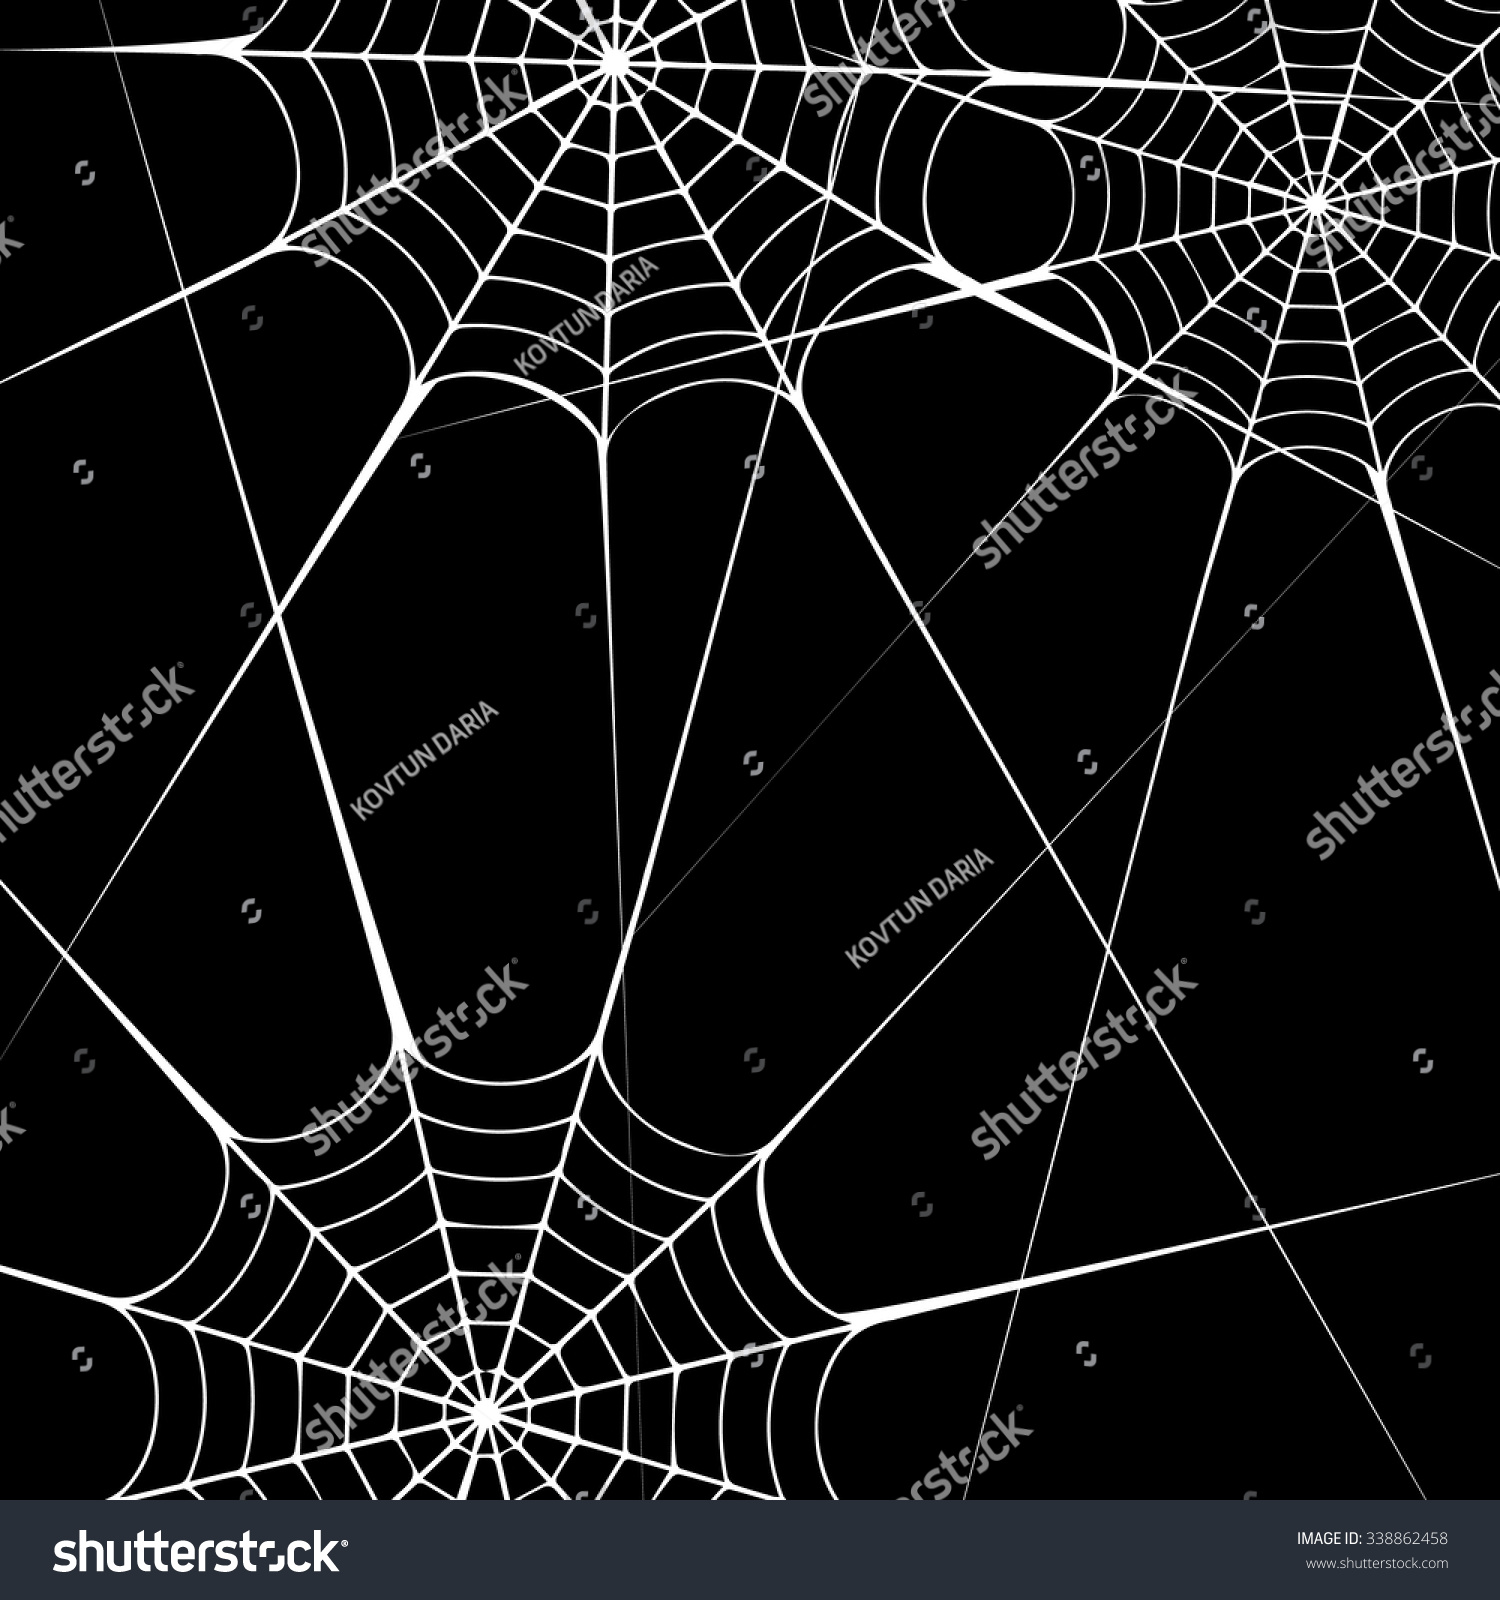 Spider Vector Halloween Illustration Black Design Stock